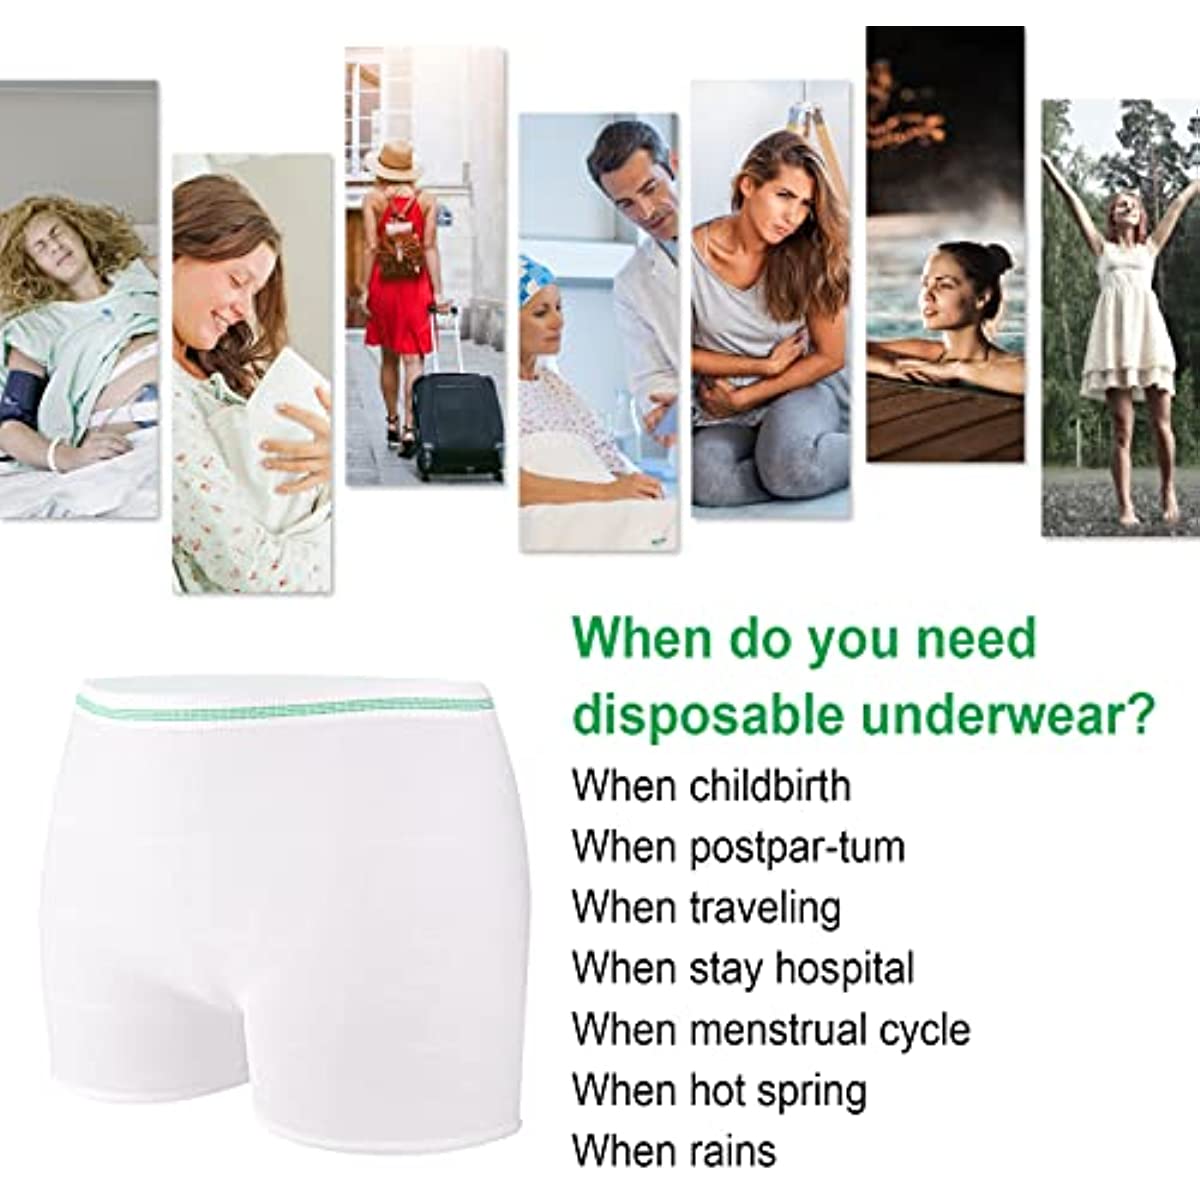 Mesh Panties Postpartum Disposable Mesh Postpartum Underwear